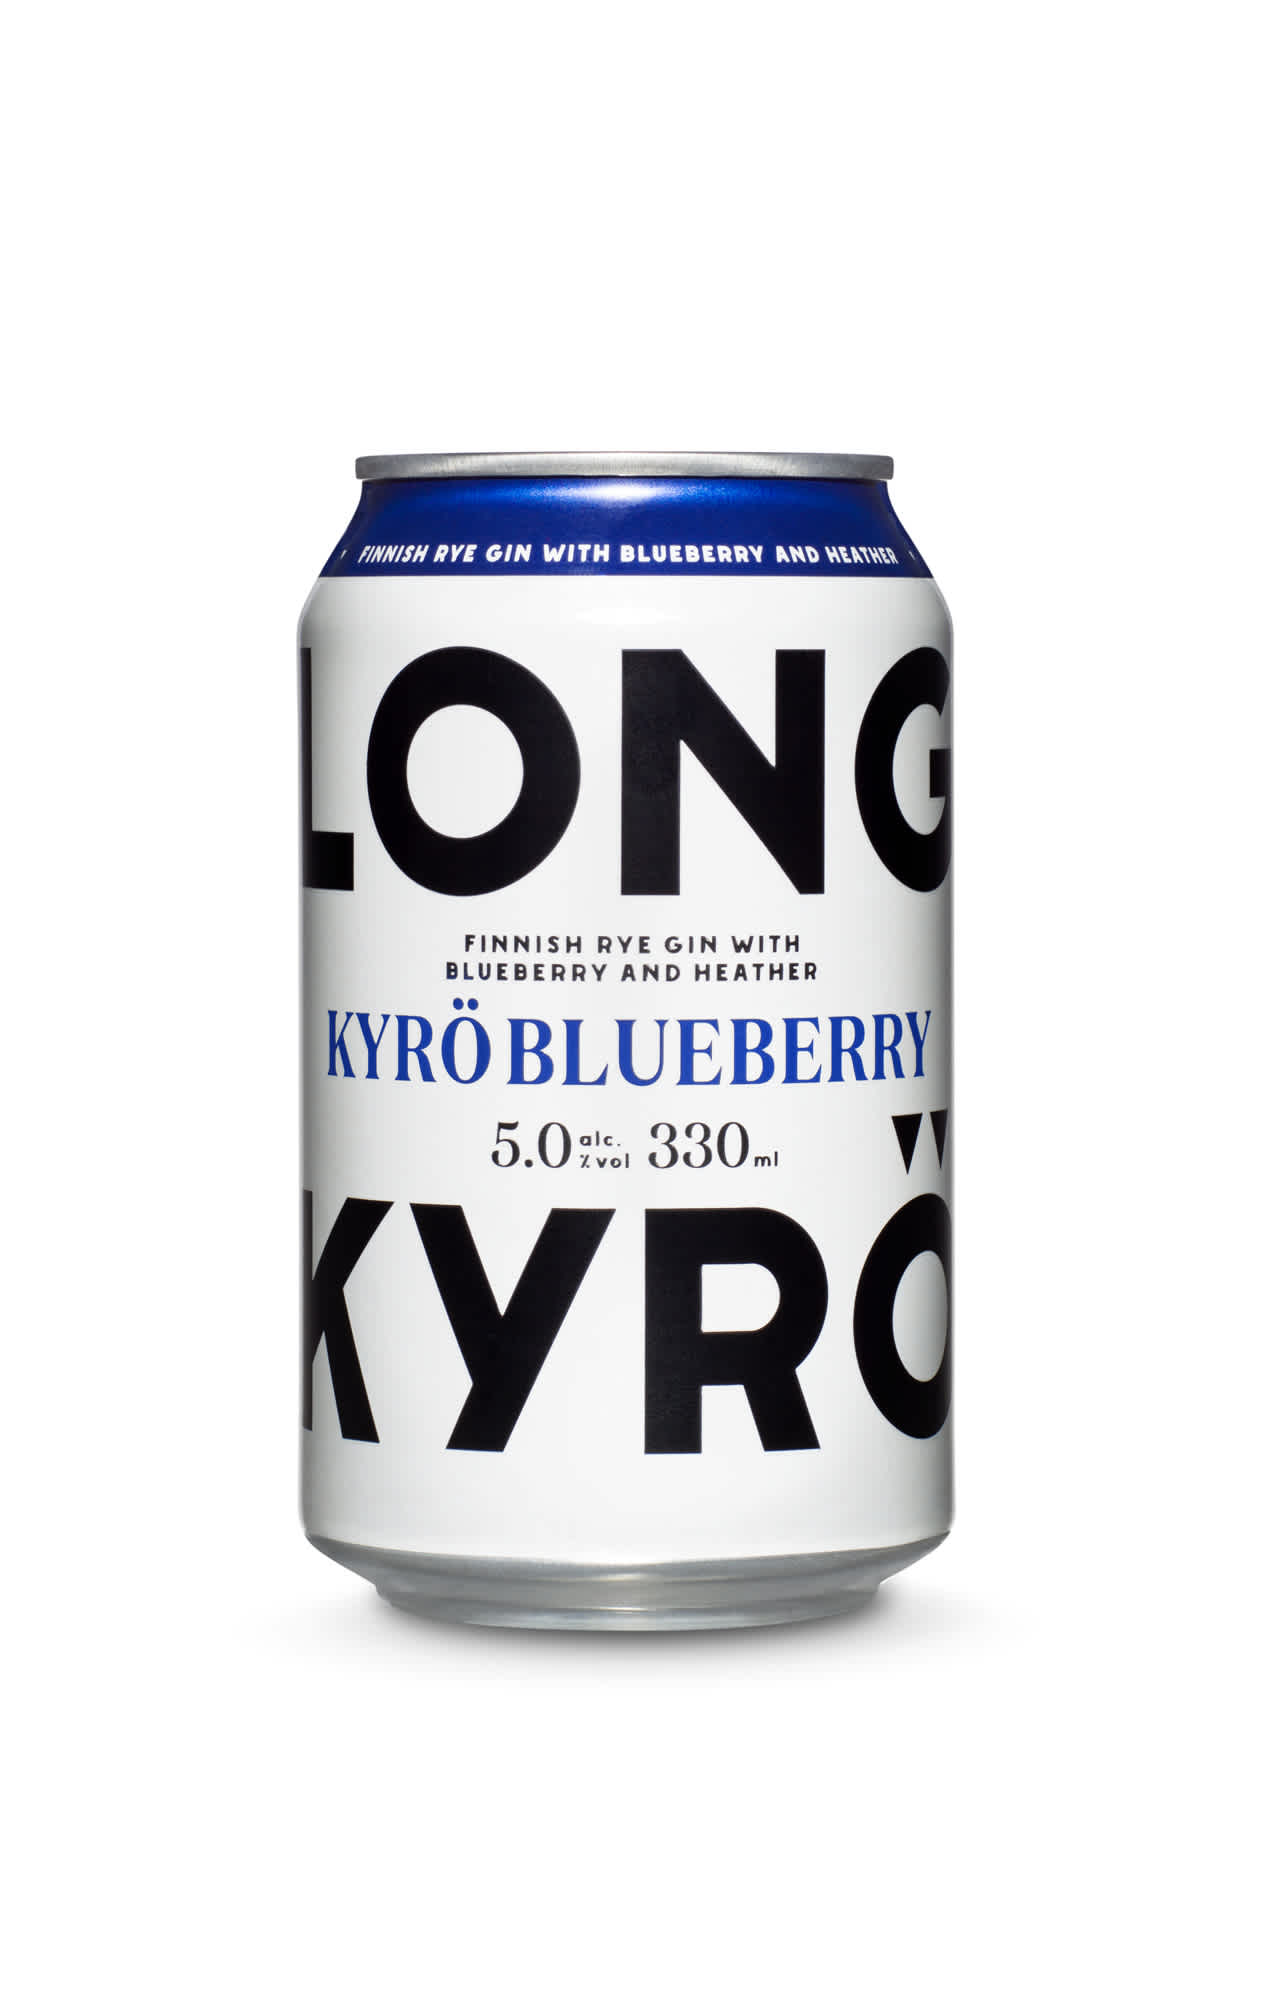 Product photo: Longkyrö Blueberry, Kyrö longdrink in a can